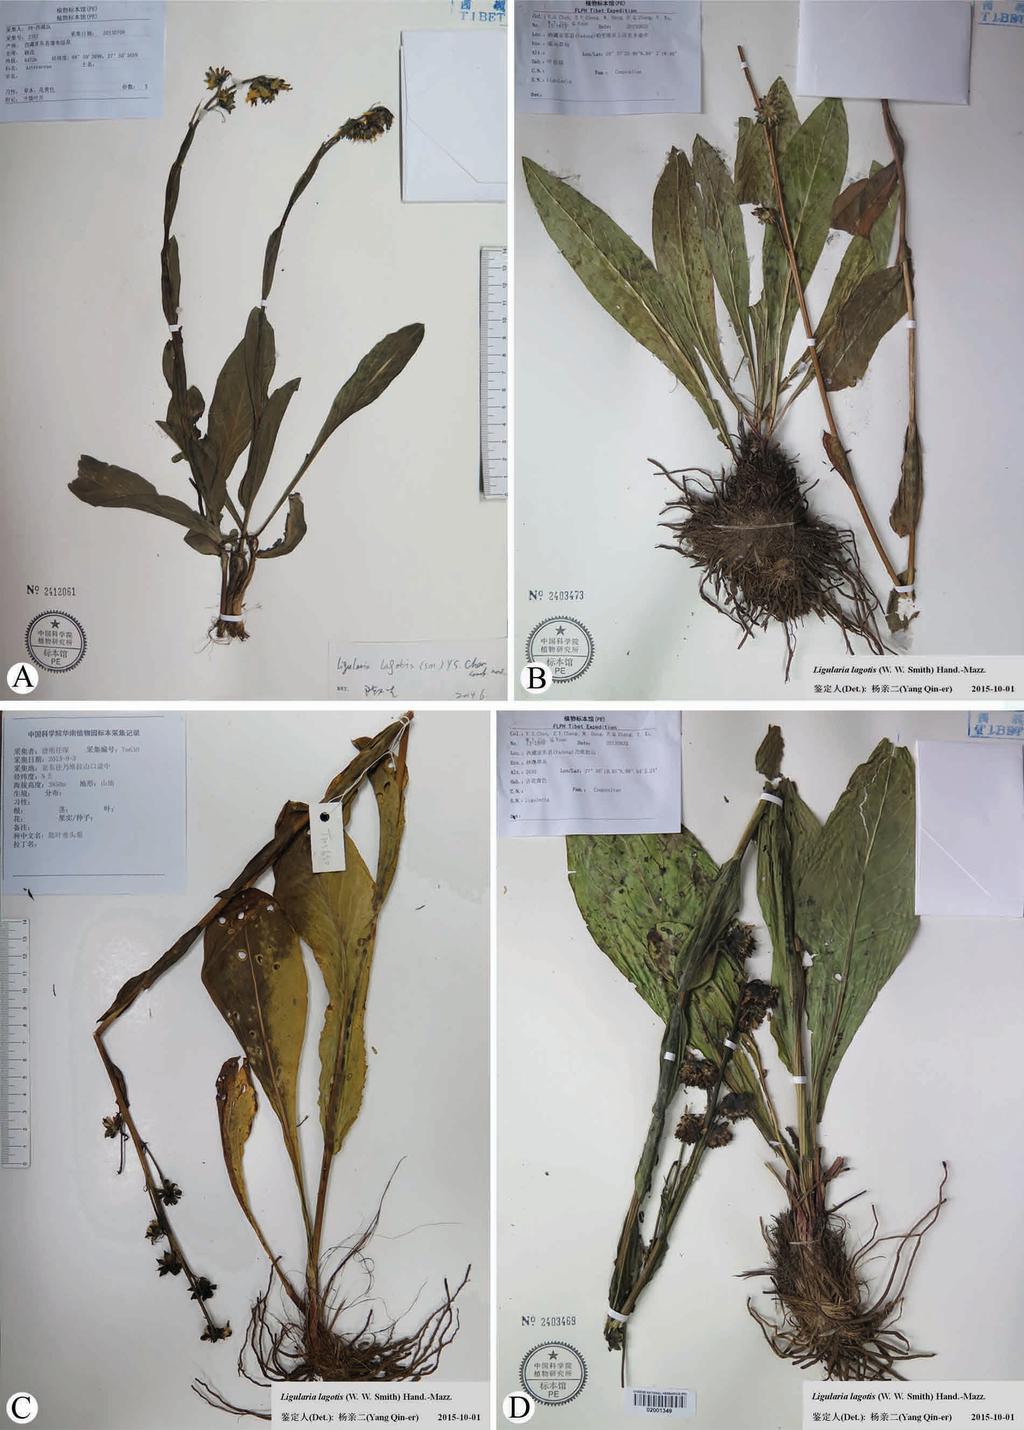 FIGURE 4. Specimens of Ligularia lagotis. A. China, Xizang, Yadong, PE-Xizang Exped. 2703 (PE). B. Same locality, Y.S. Chen et al. 13-1813 (PE). C. Same locality, M.